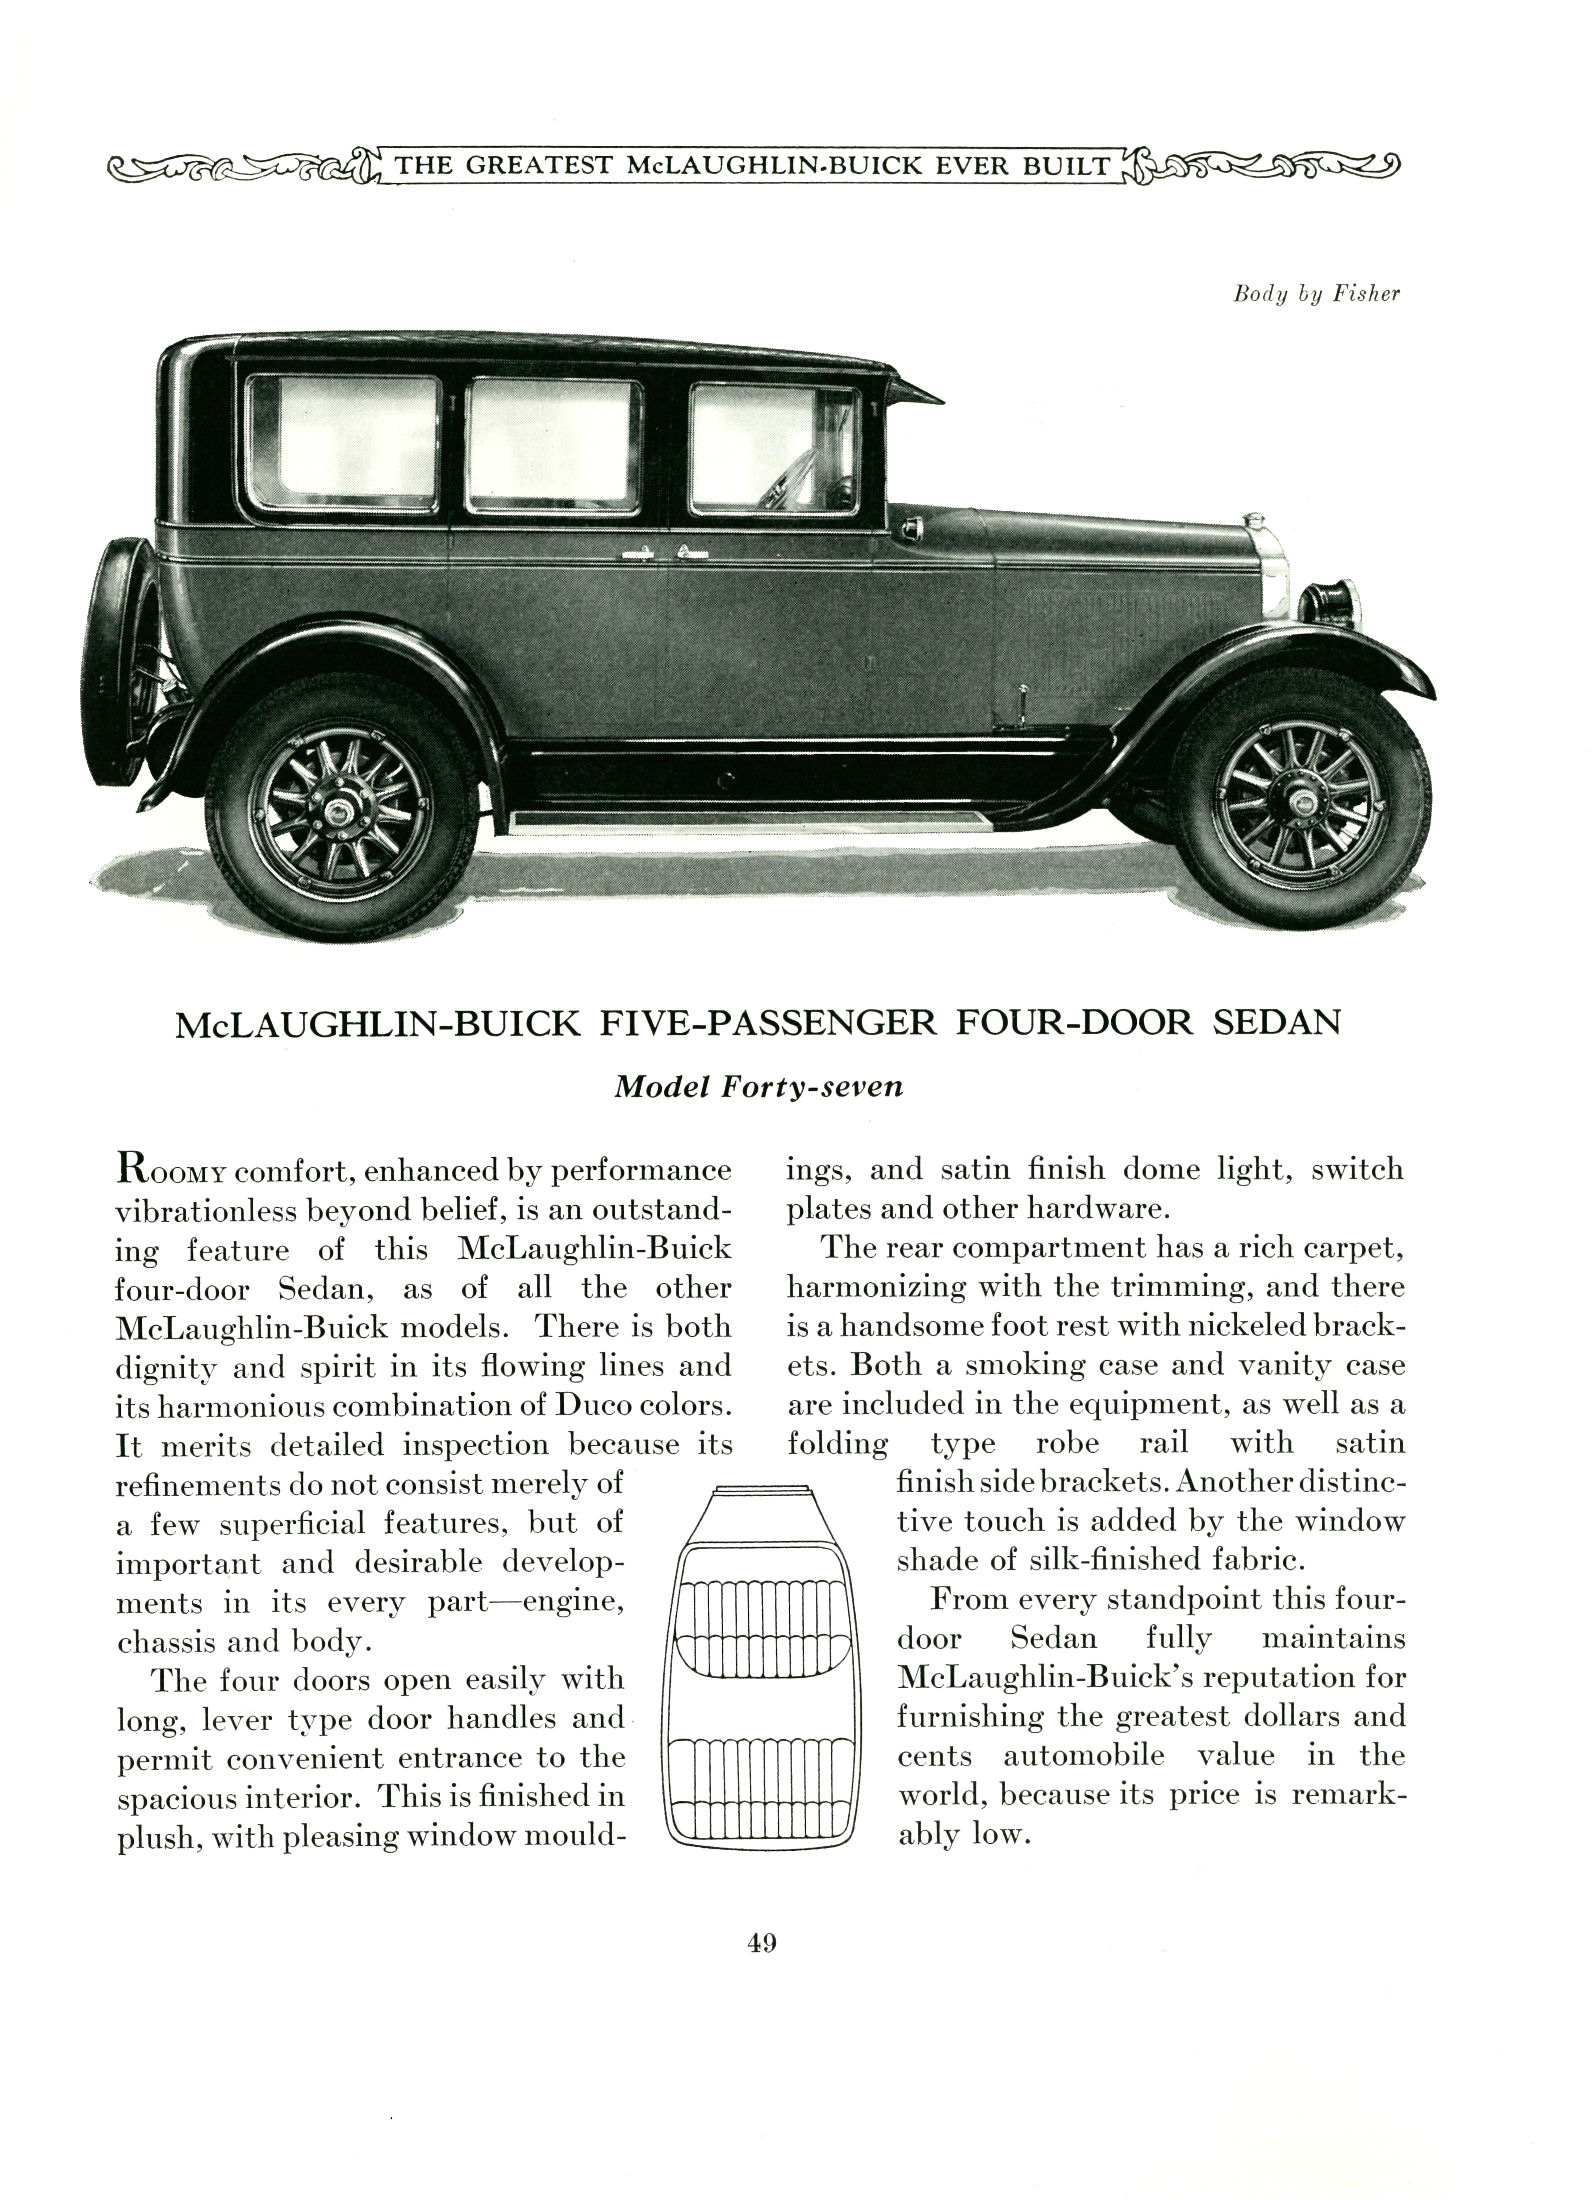 1930 McLaughlin Buick Booklet-49